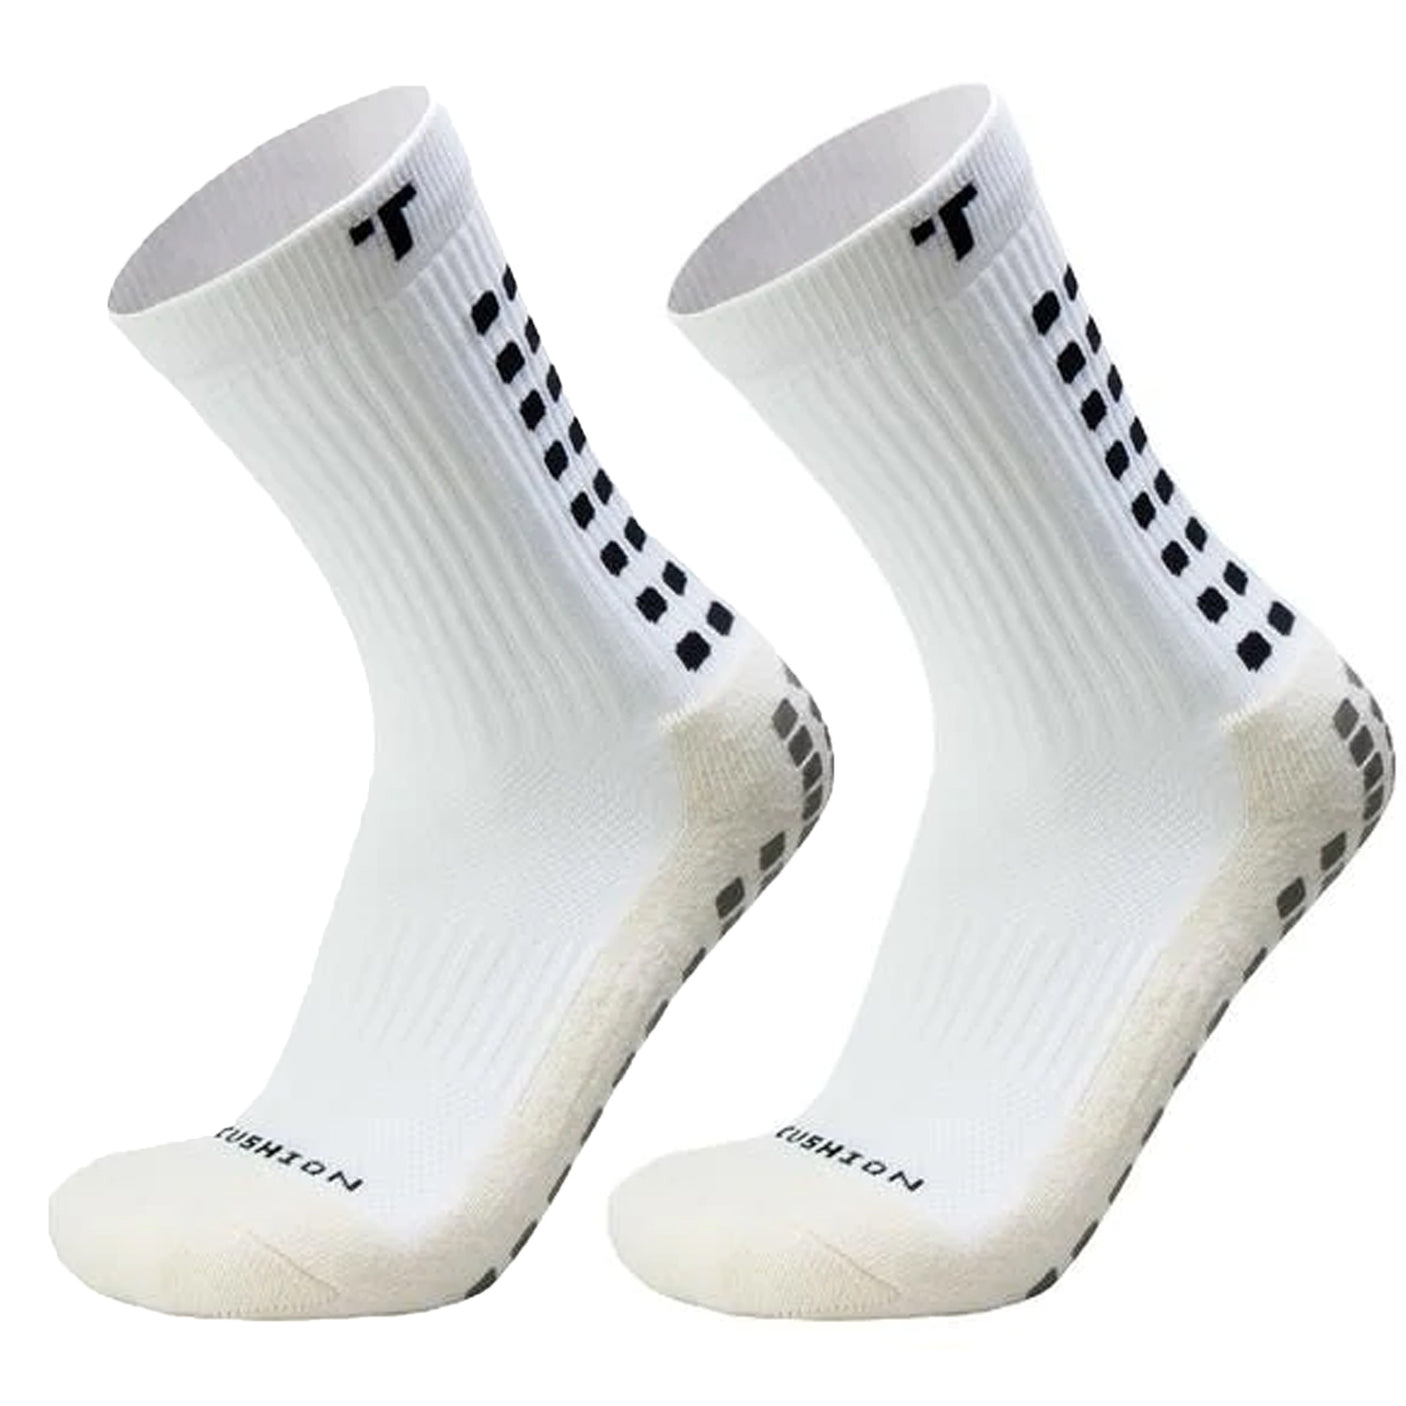 TRUsox 3.0 Mid-Calf Cushioned Grip Socks White/Black - S